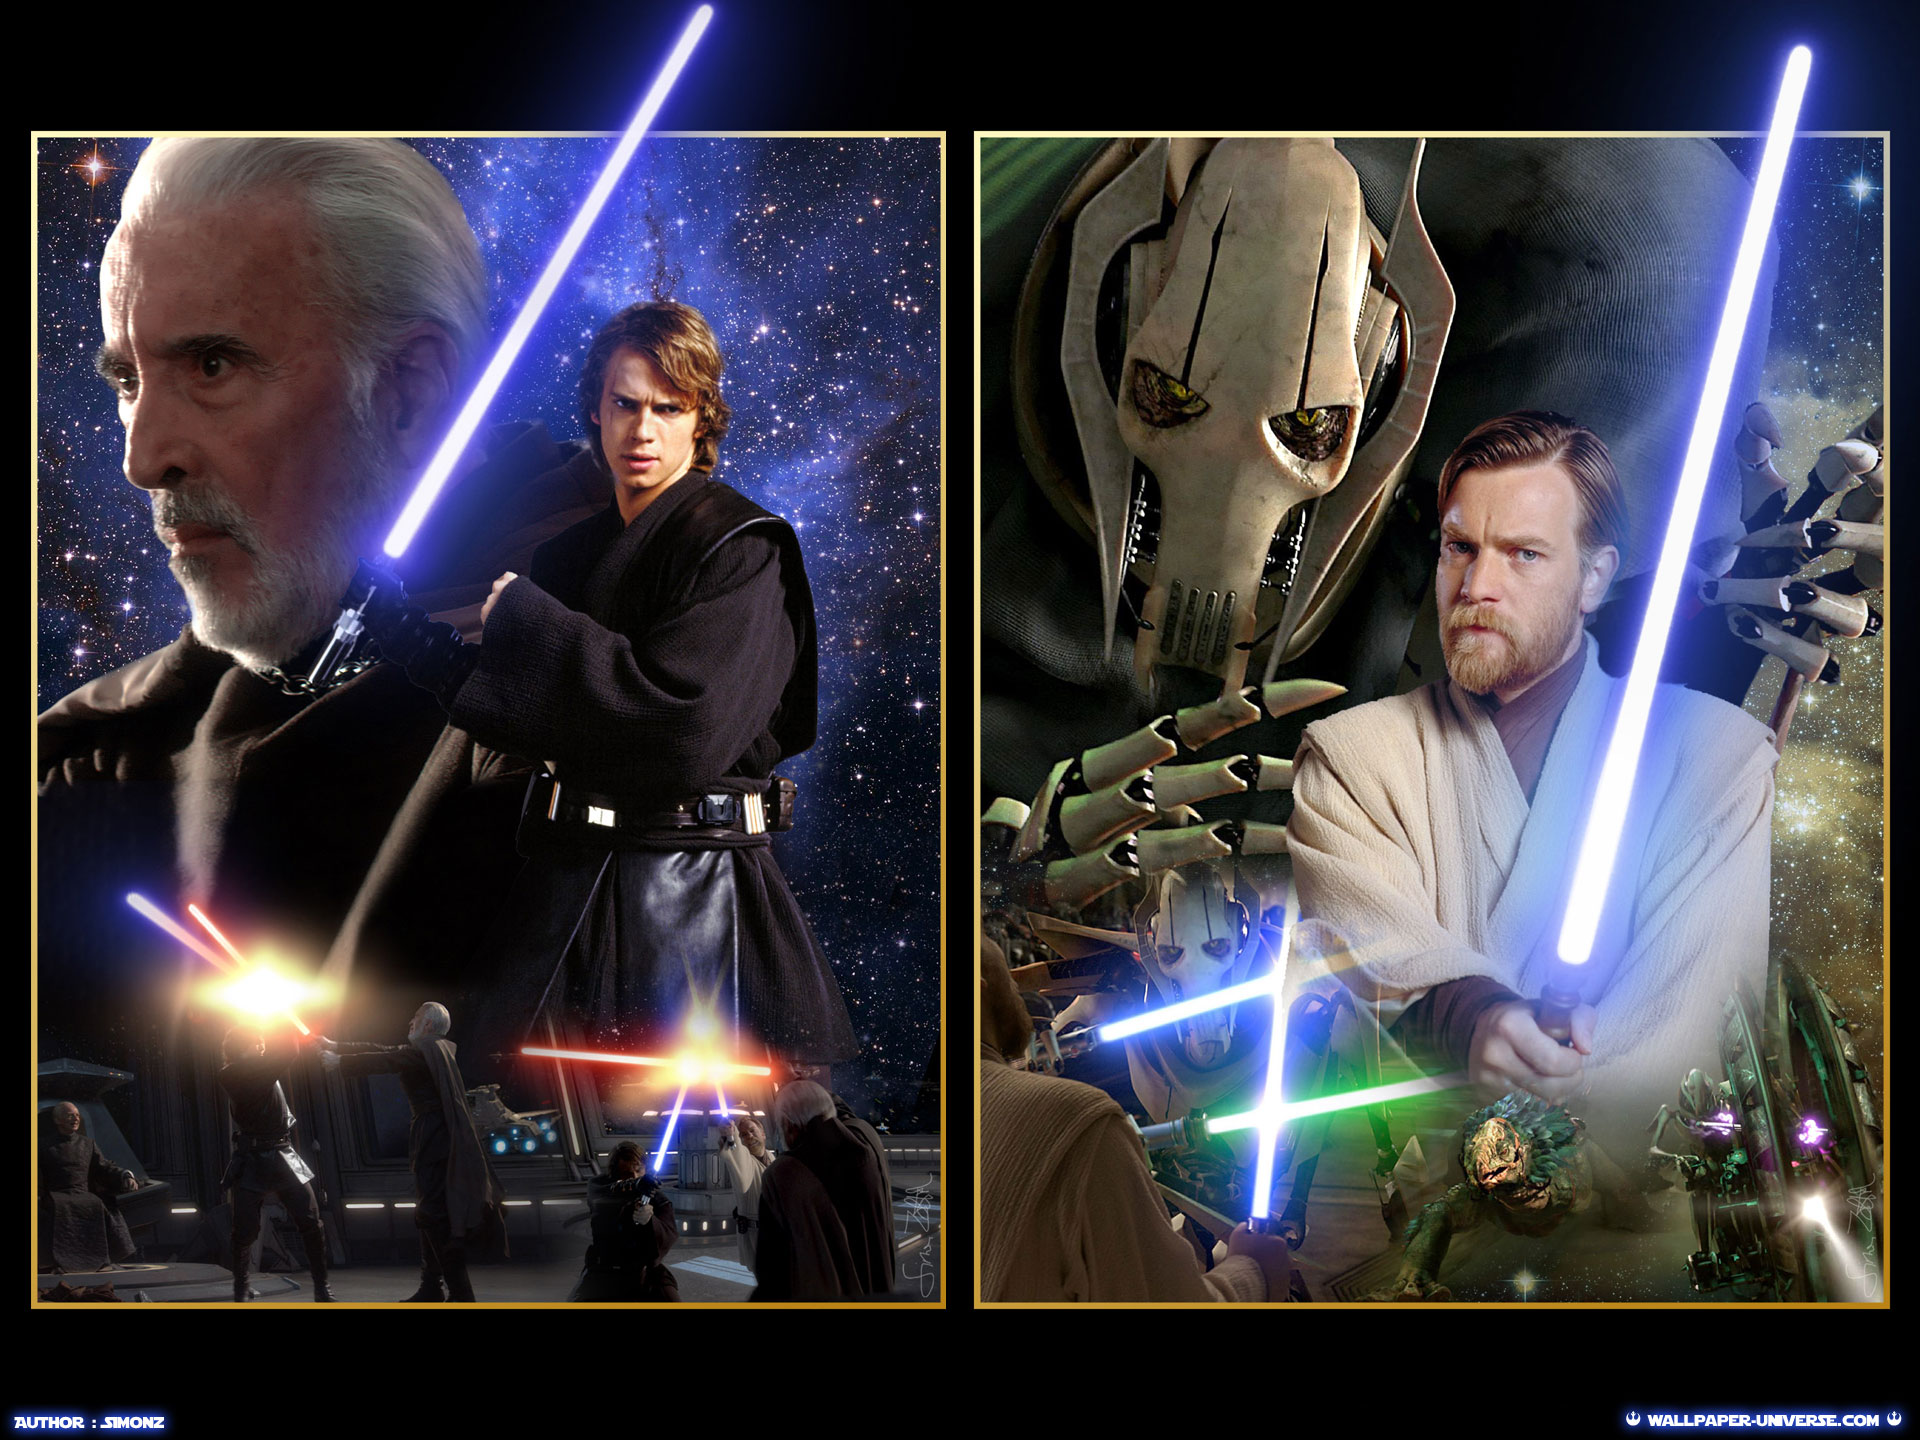  Anakin vs Dooku Obi Wan vs General Grievous HD wallpaper and